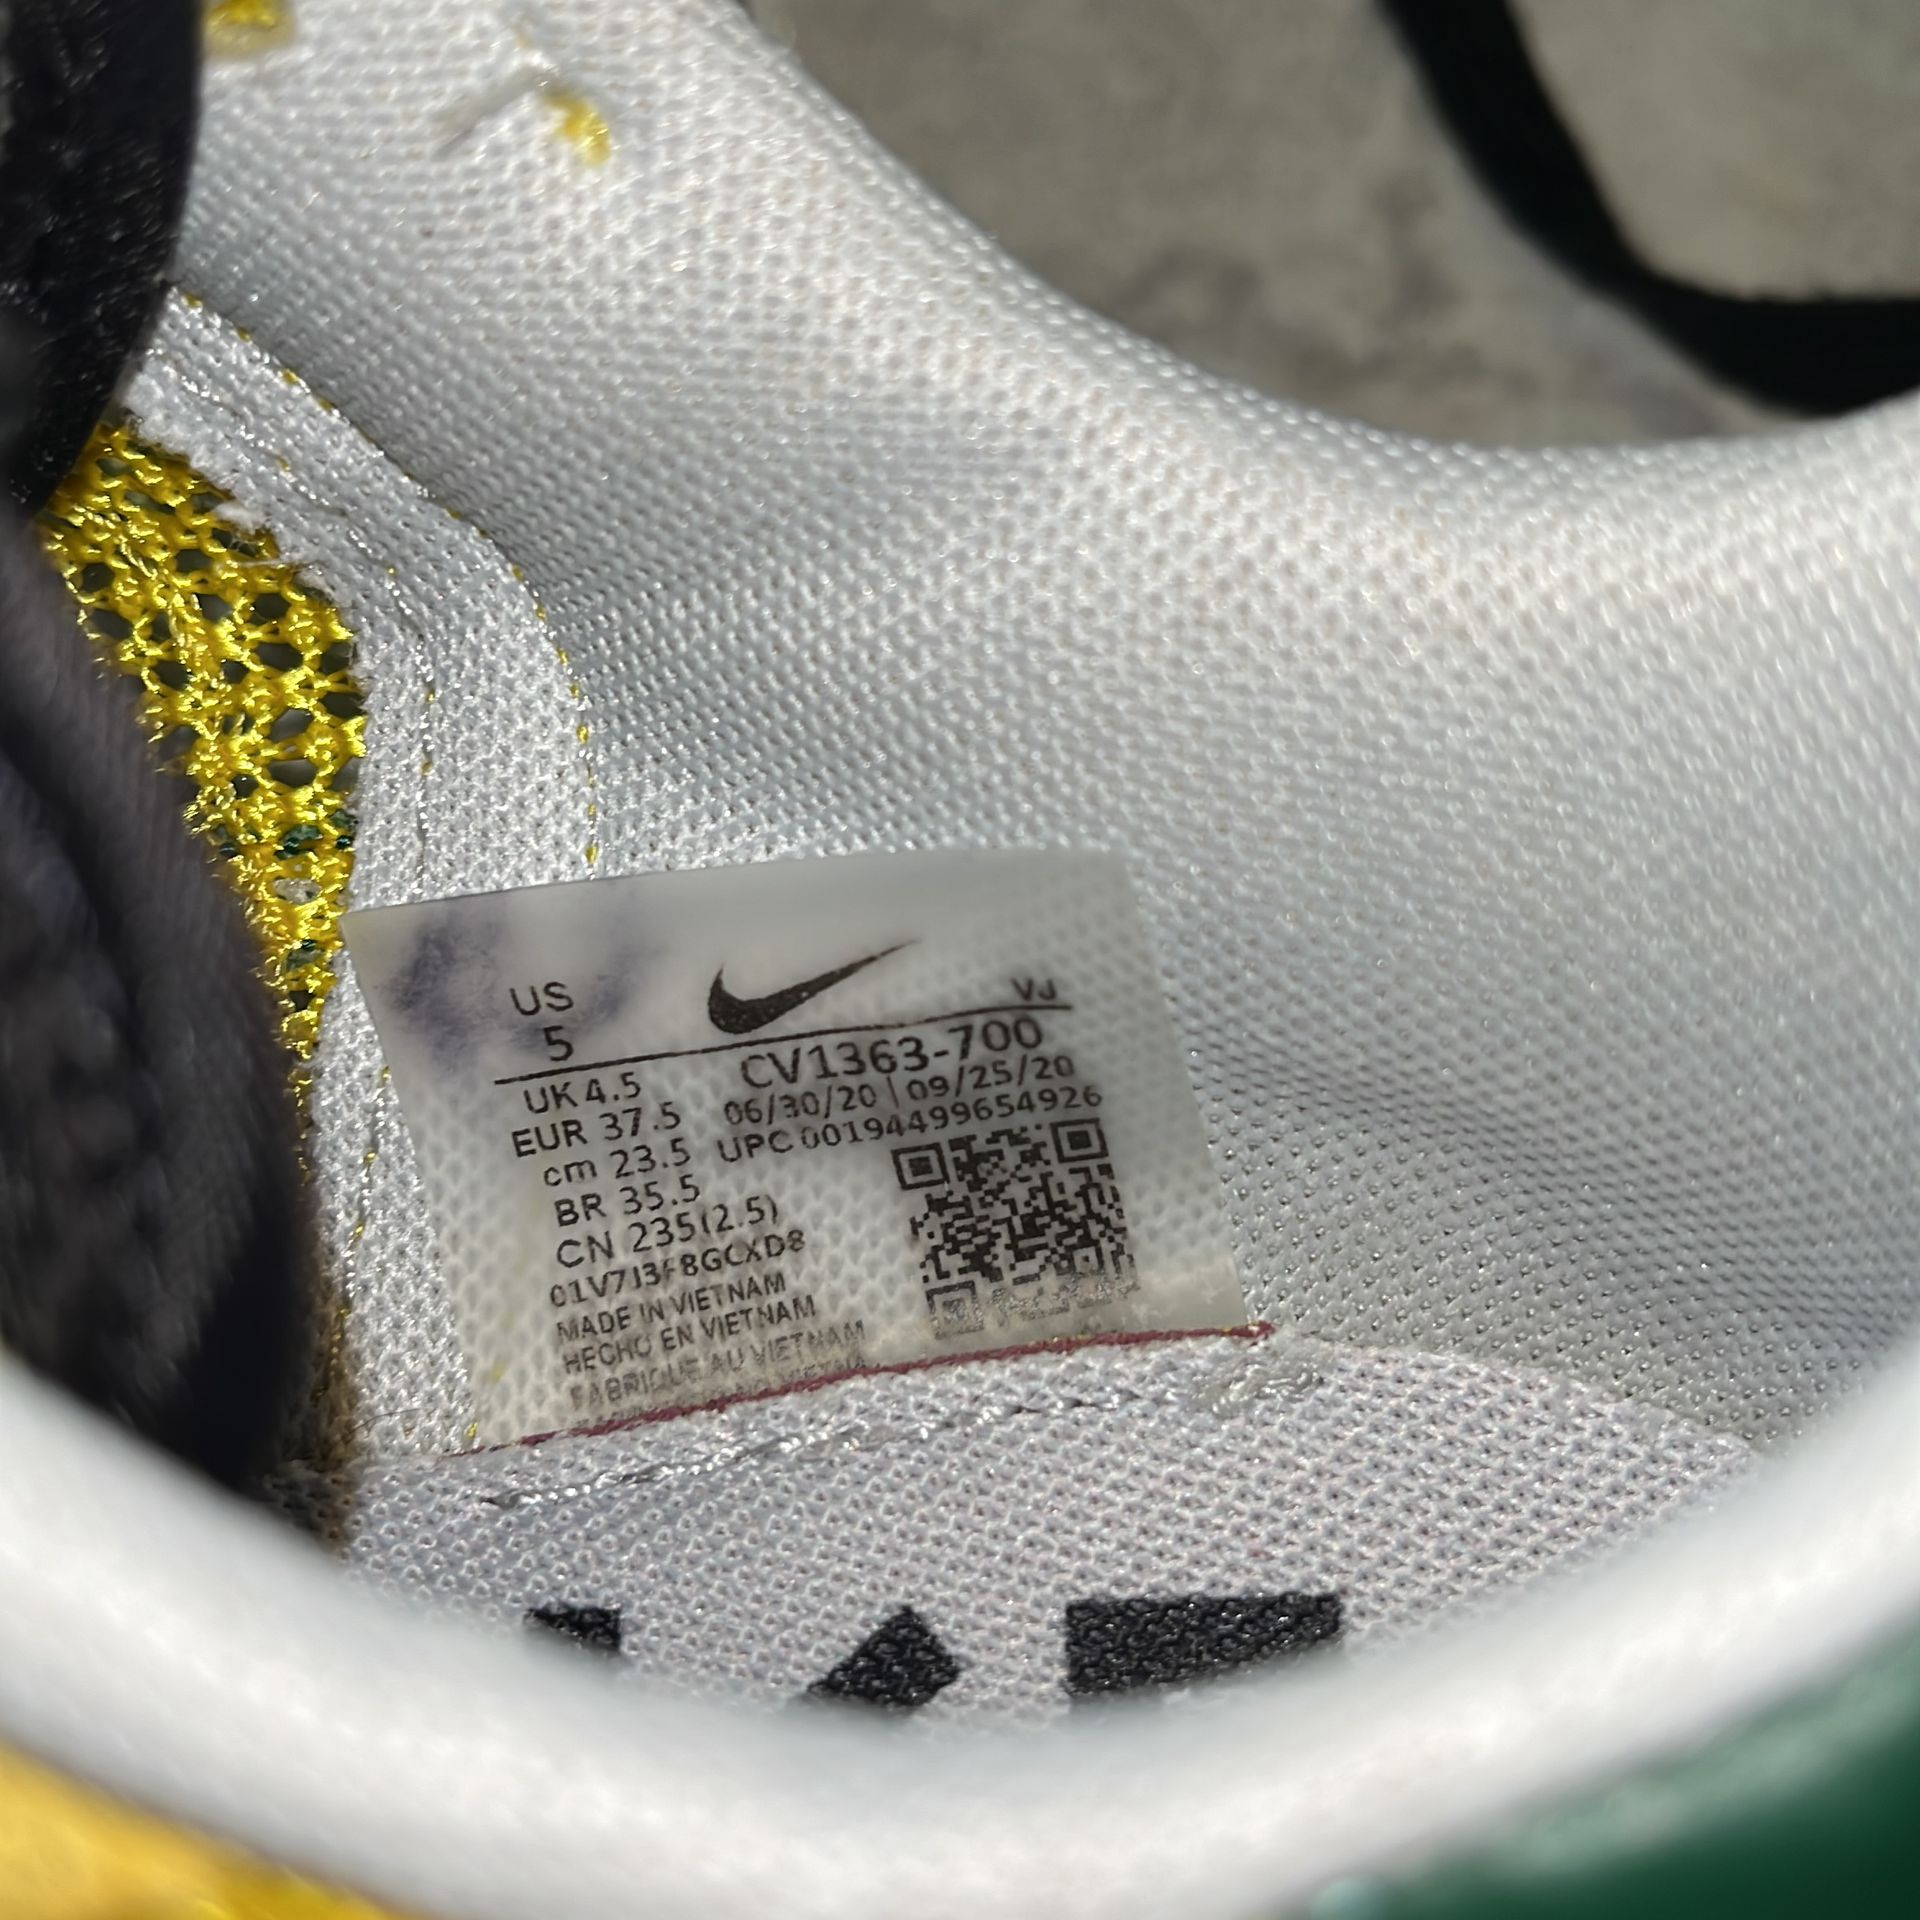 Nike Sacai x VaporWaffle 'Tour Yellow'